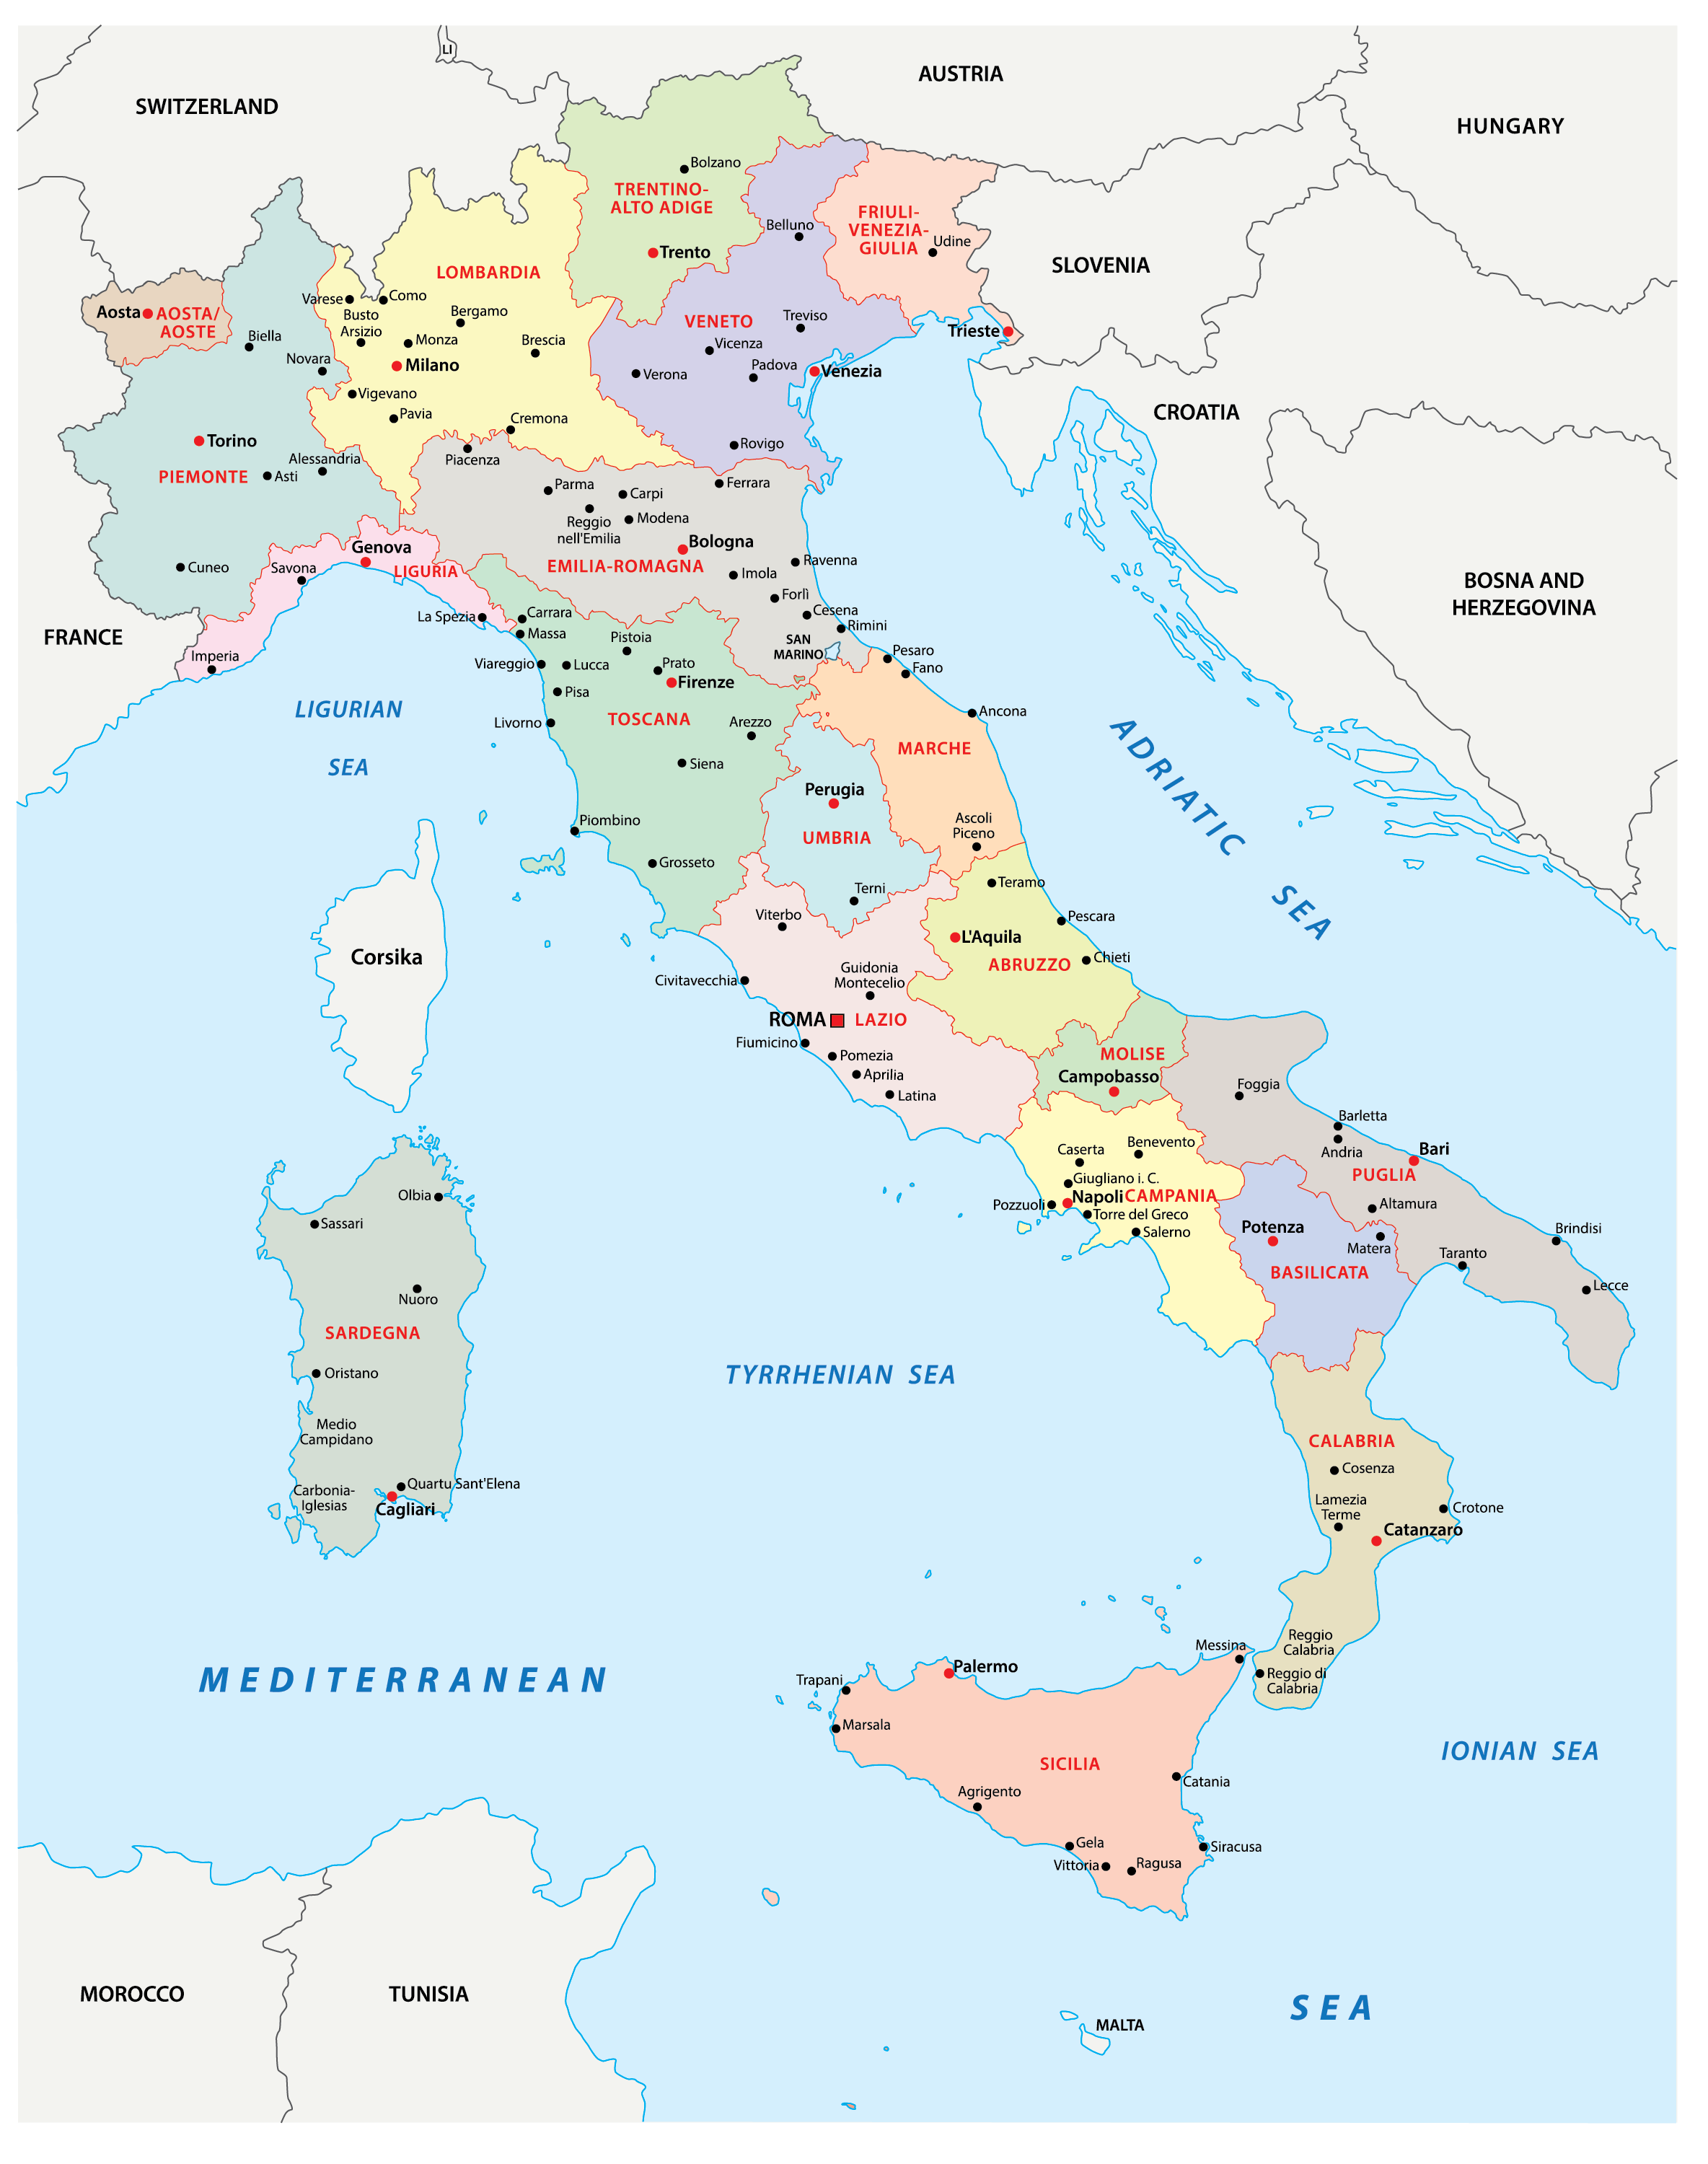 Italian Regions and Regional Capitals Map - Regions of Italy